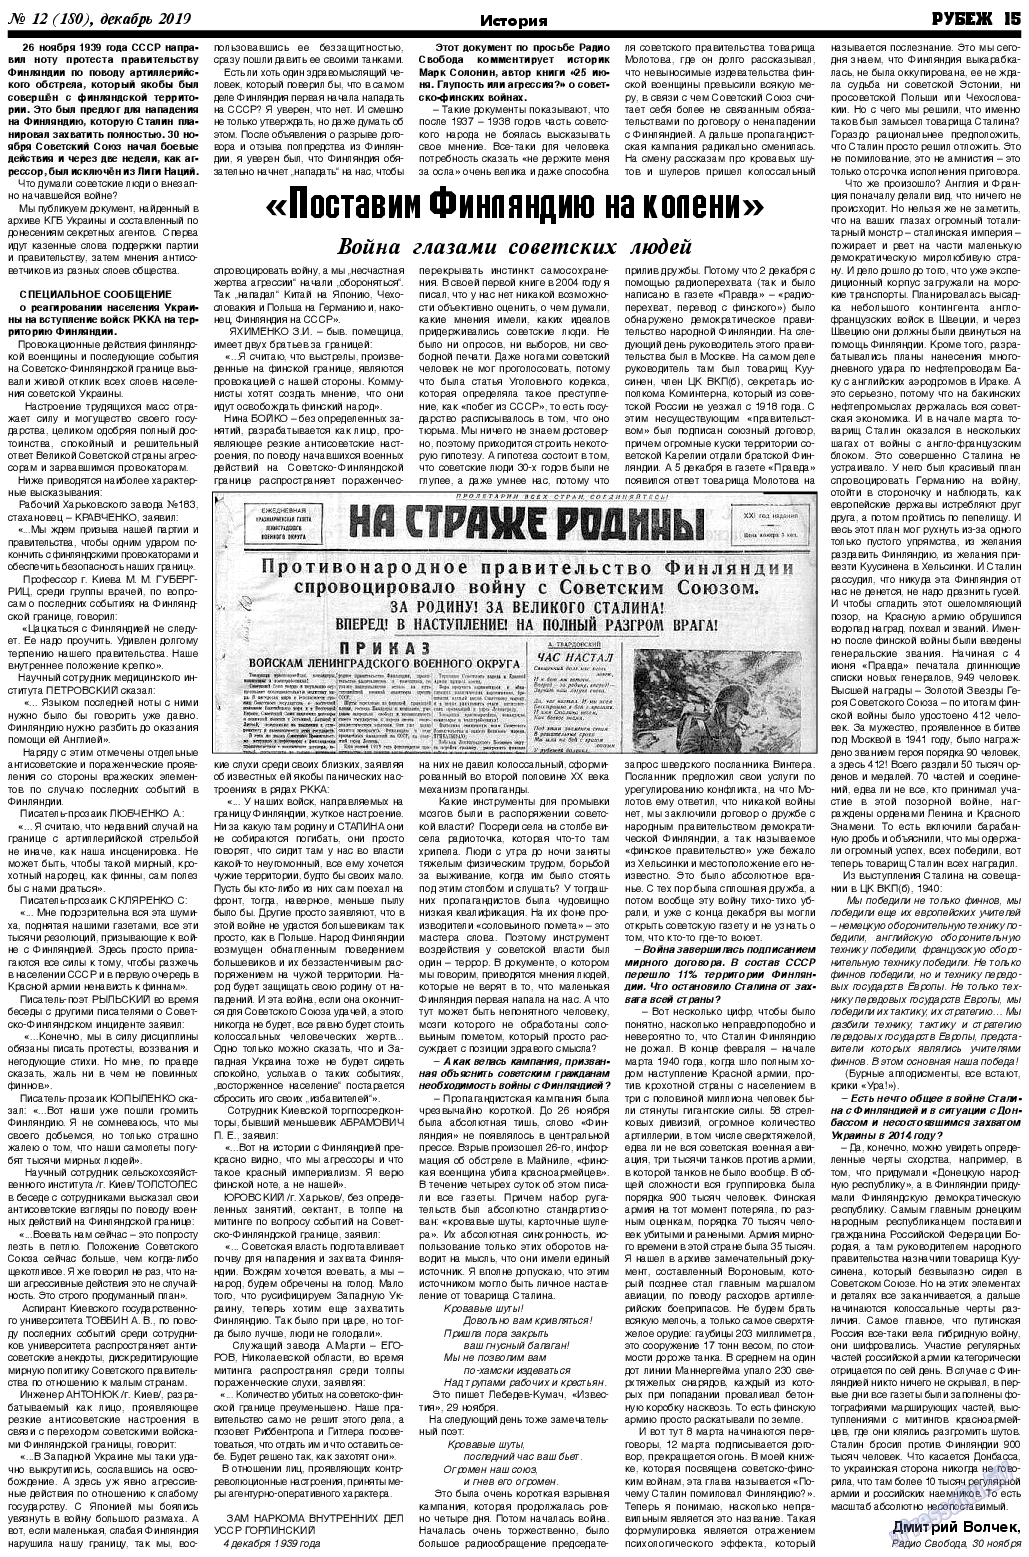 Рубеж, газета. 2019 №12 стр.15